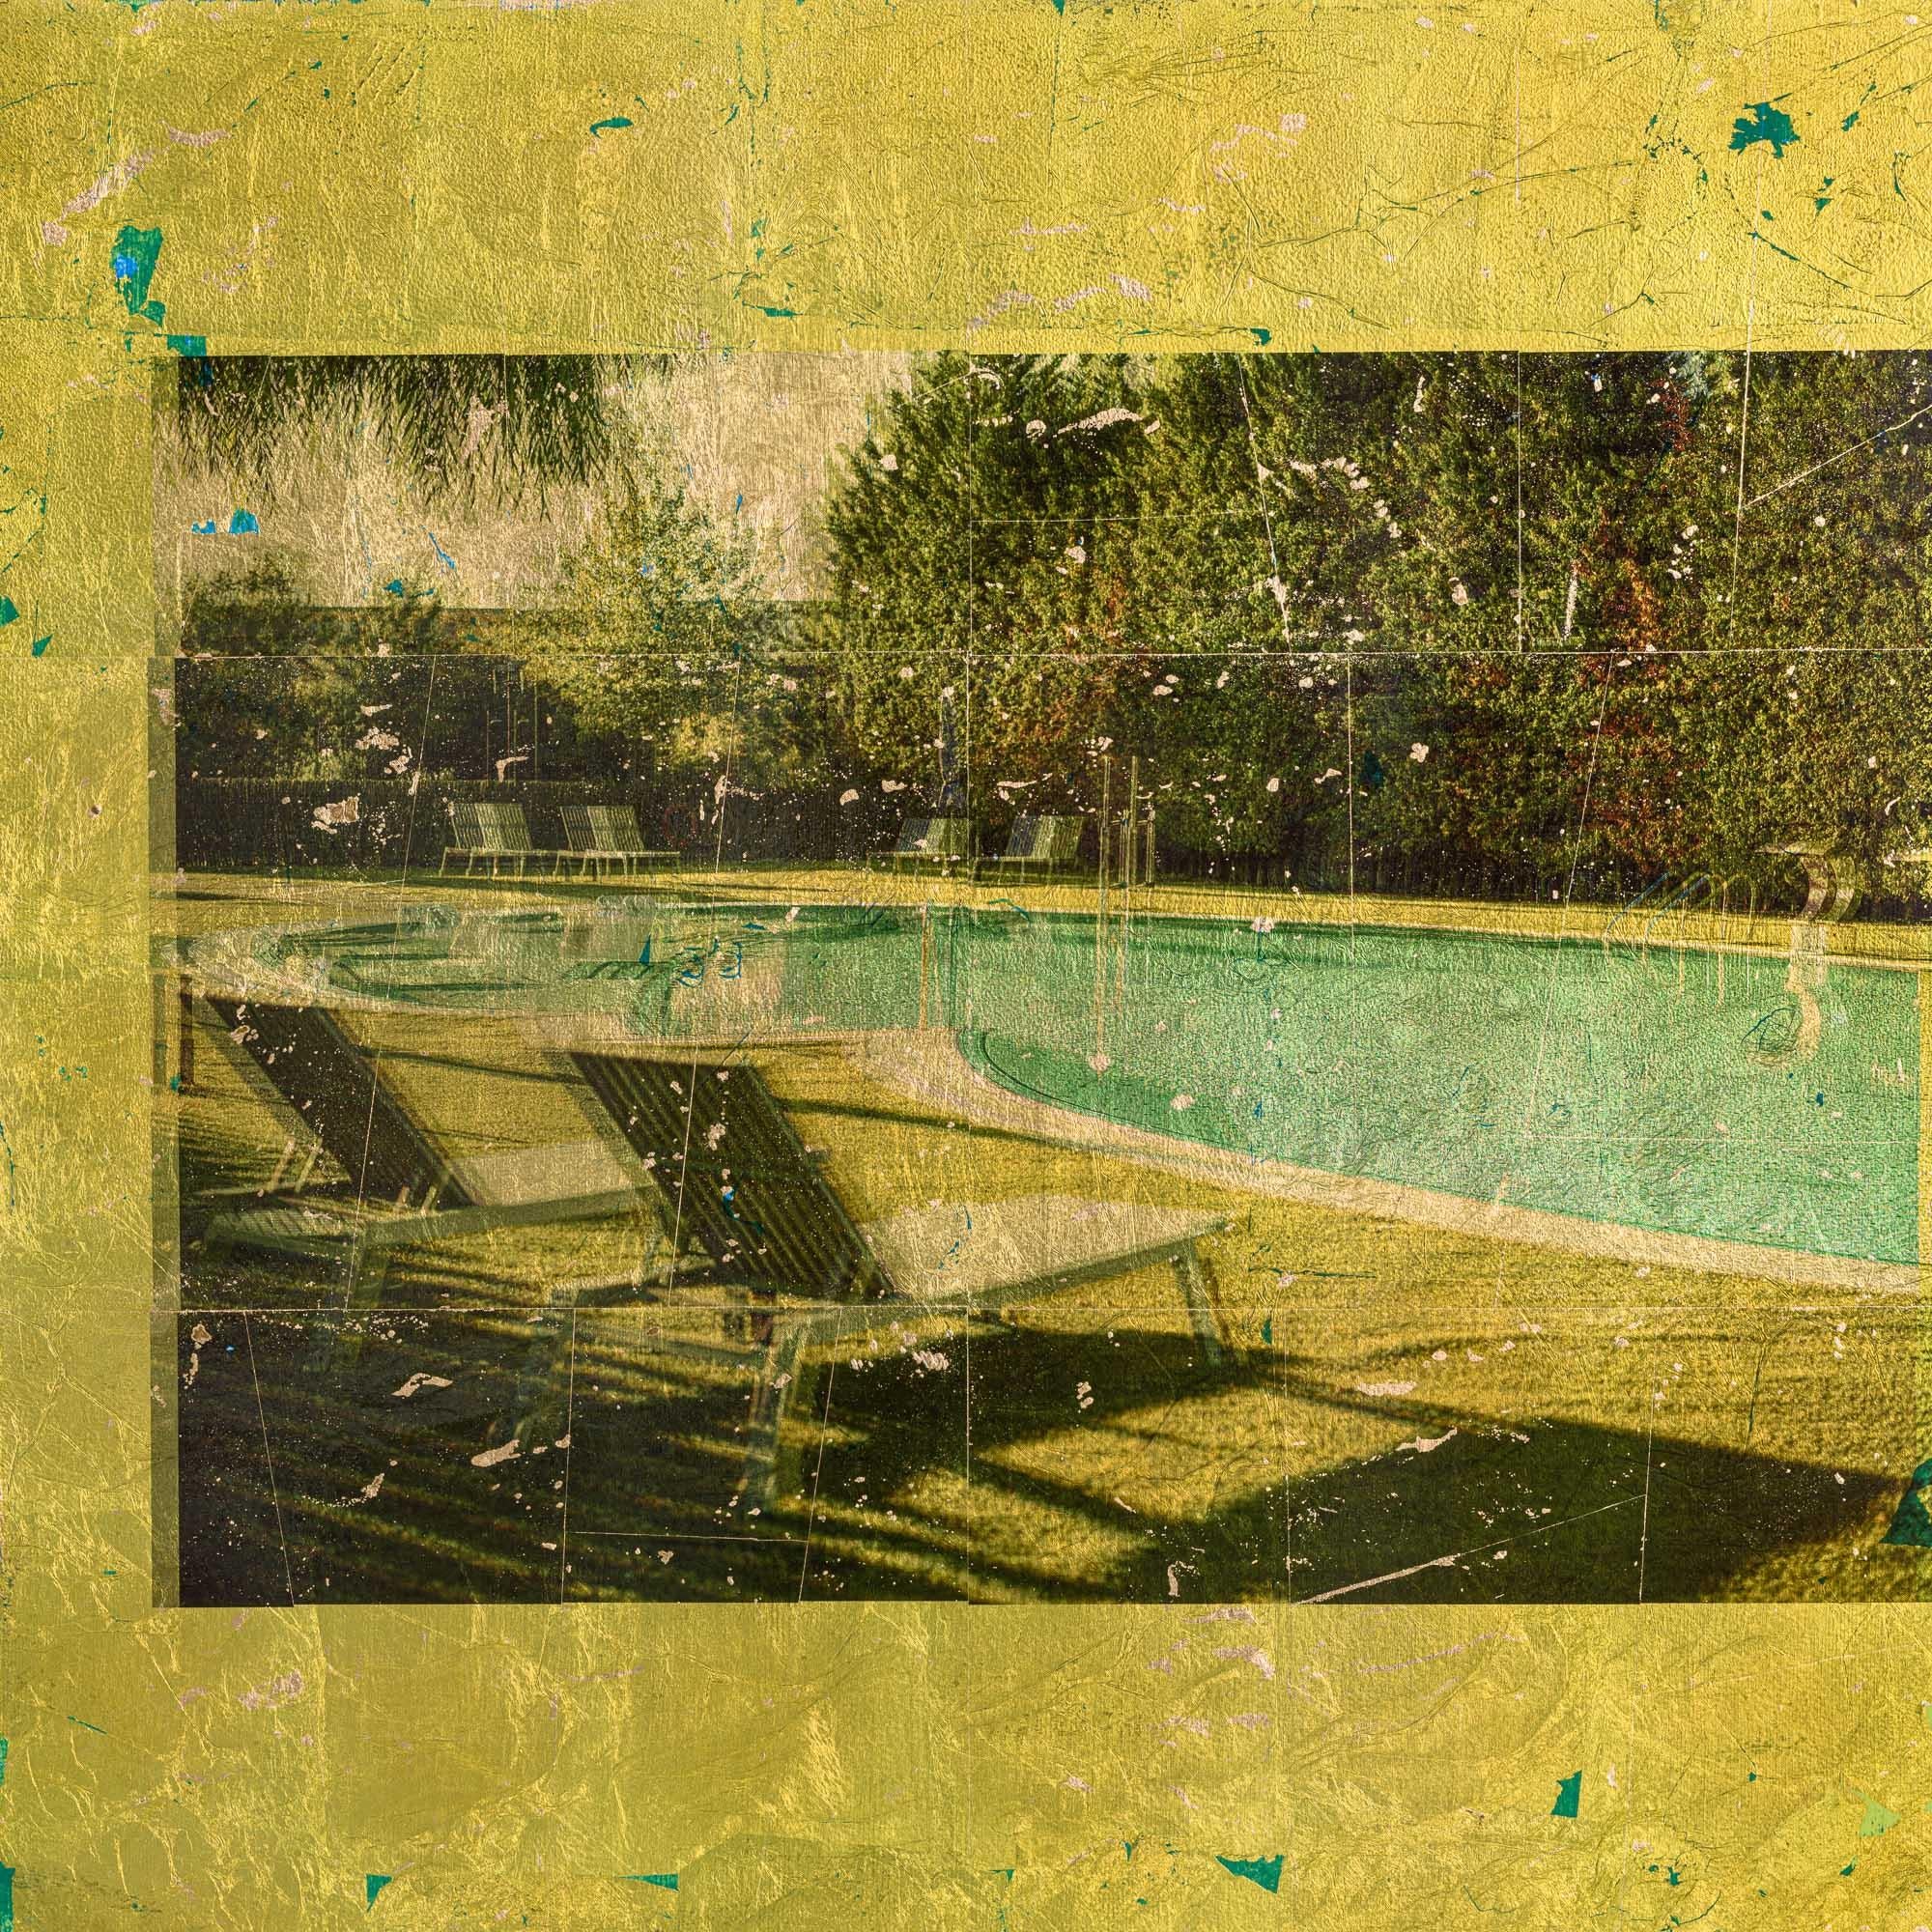 Poolside Barcelona 200 - Abstract Mixed Media Art by Mark Jackson